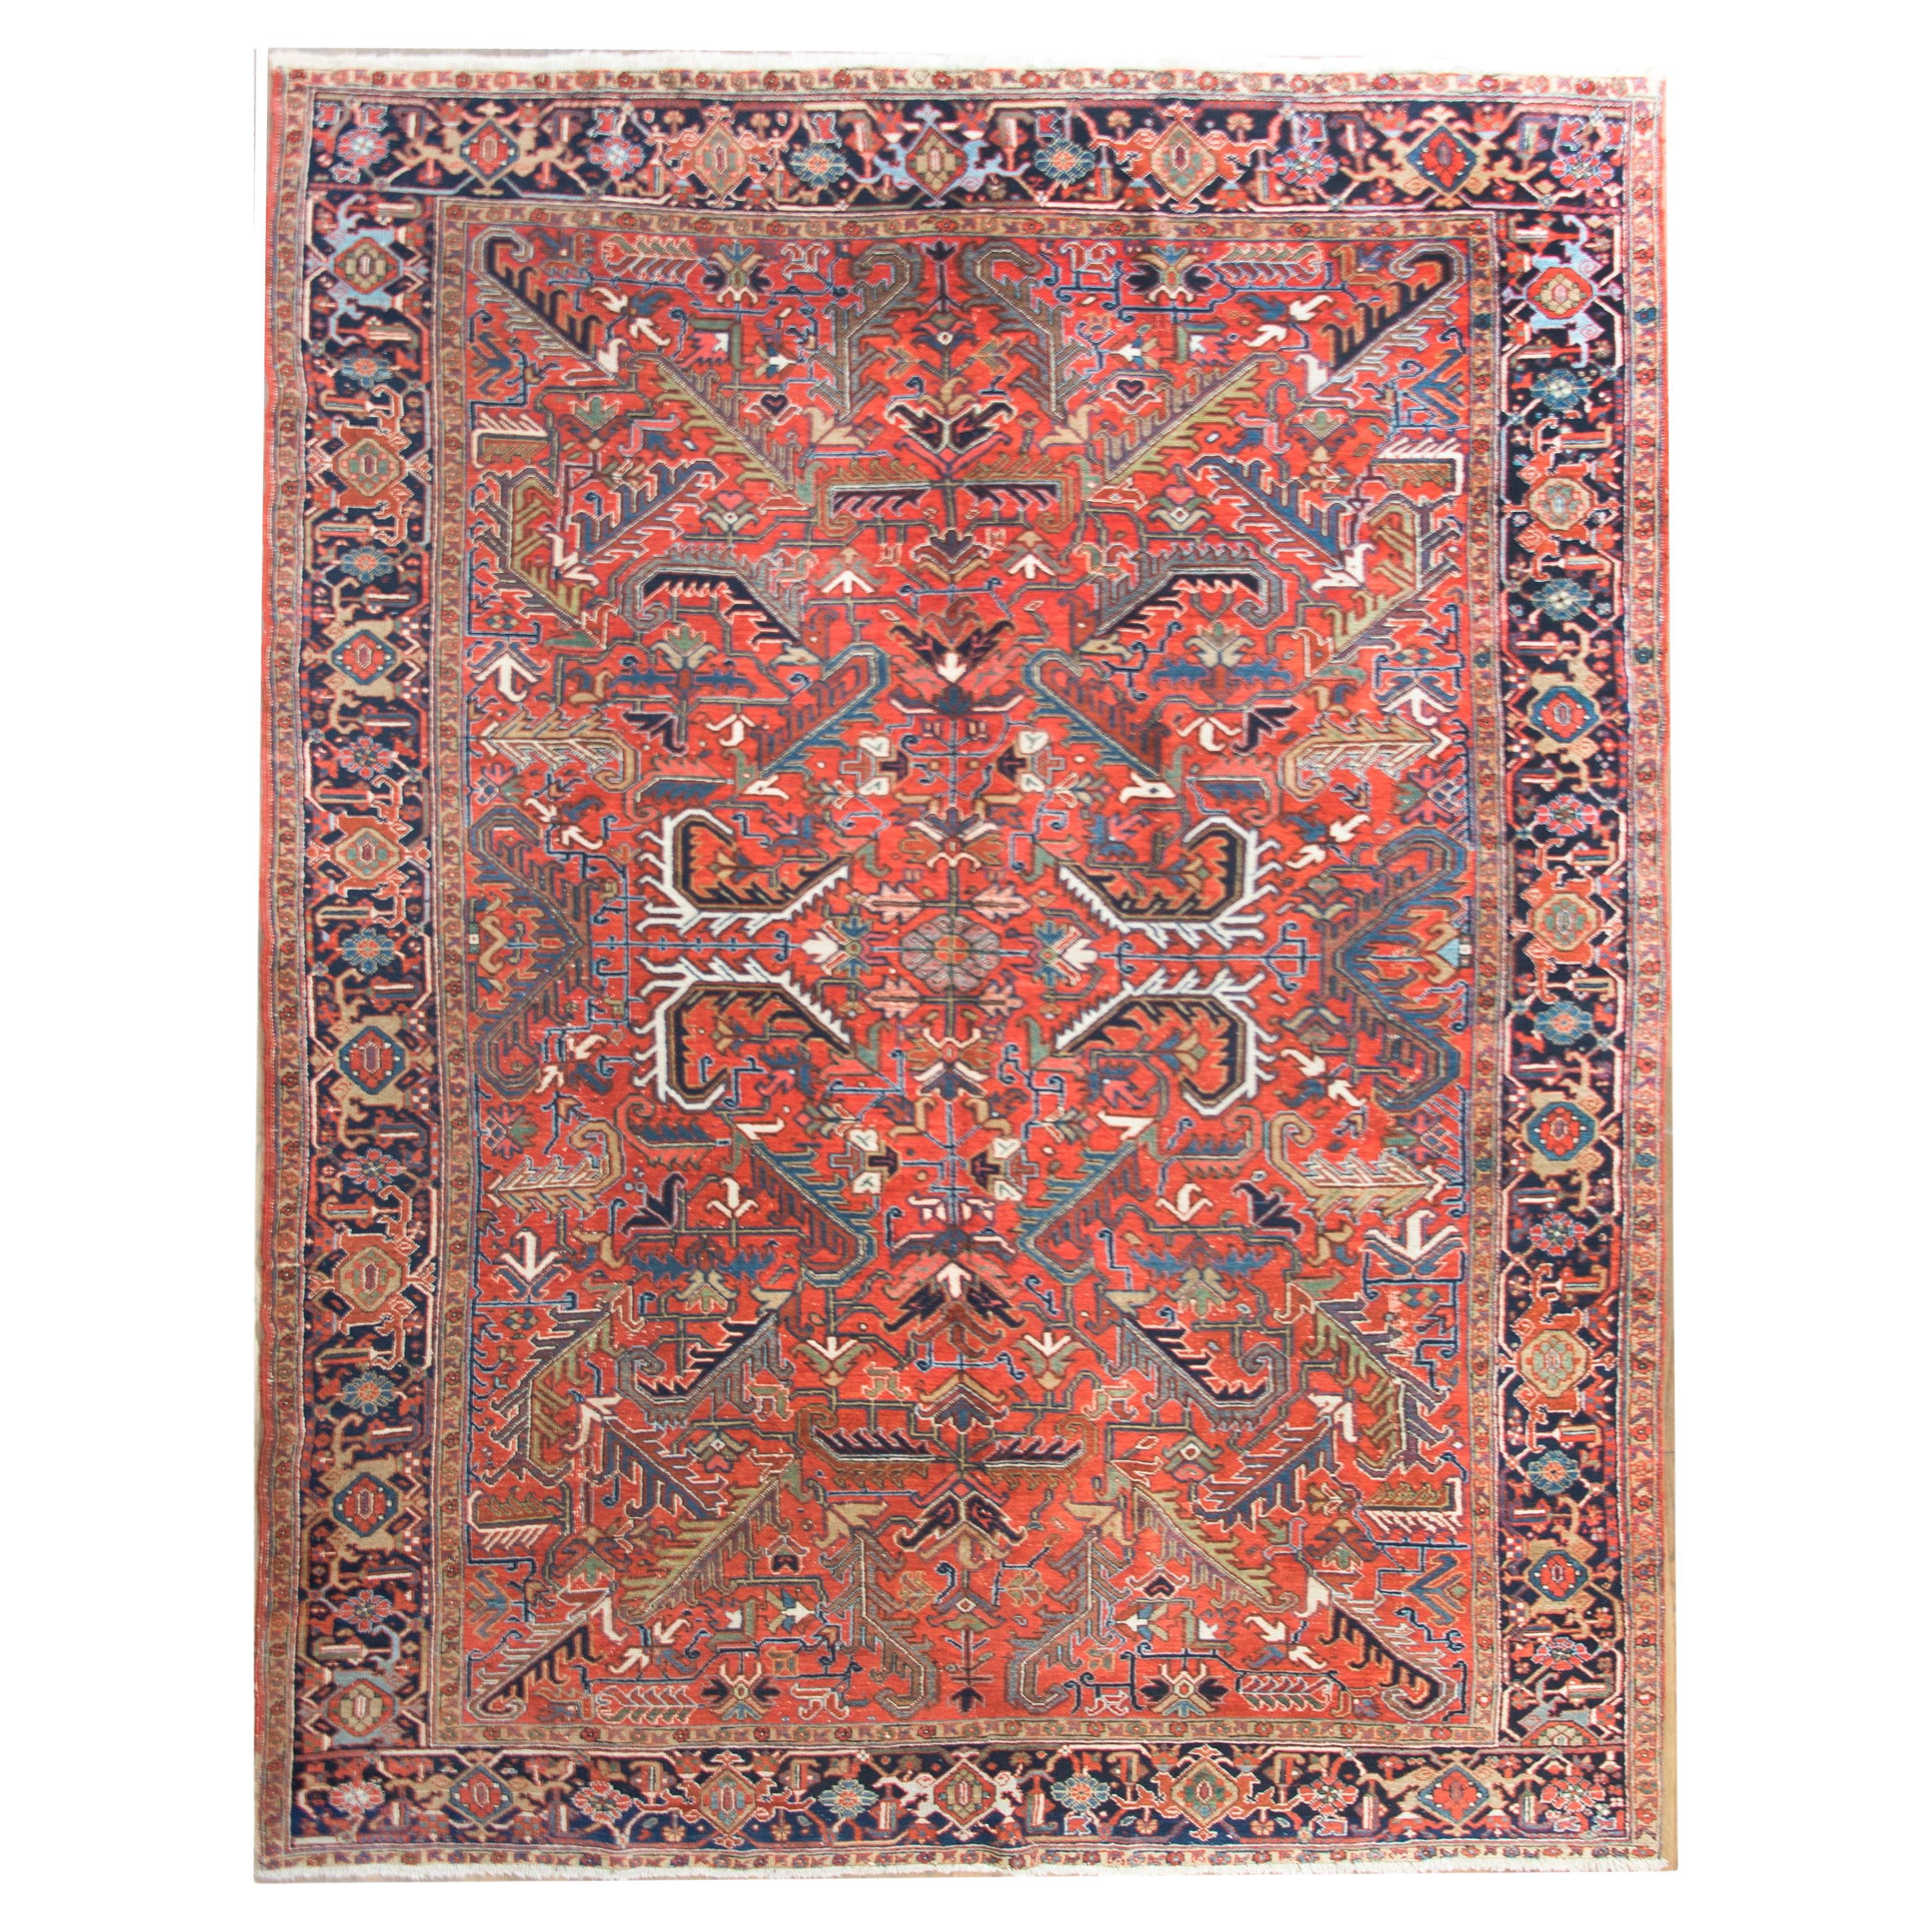 Early 20th Century Persian Heriz Rug